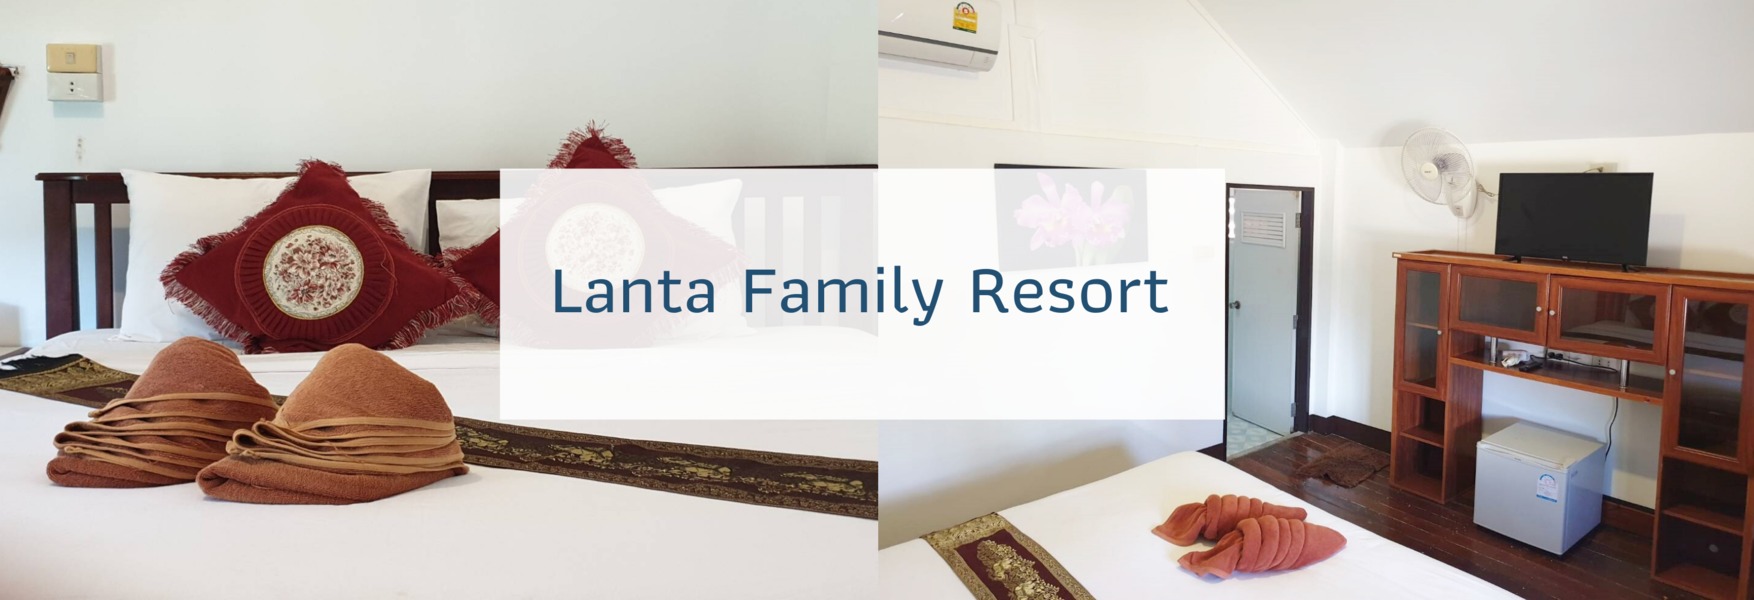 Lanta Family Resort